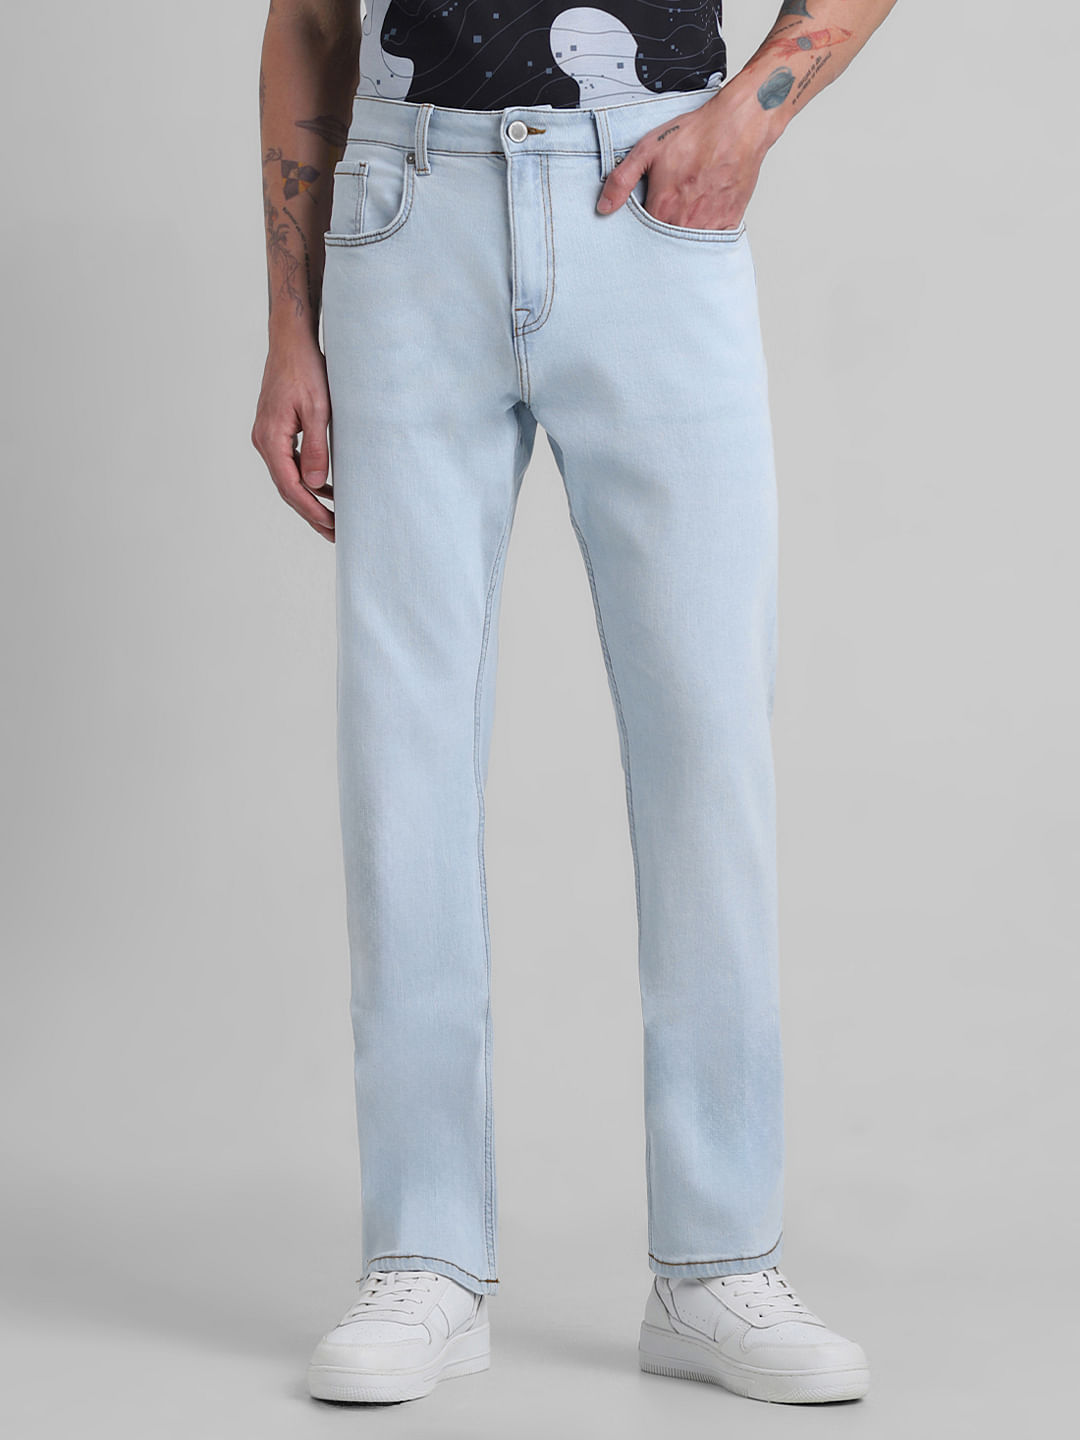 Retro Mens Holiday Dance Party Slim Denim Bell Bottom Flared Pants Bootcut  Jeans | eBay